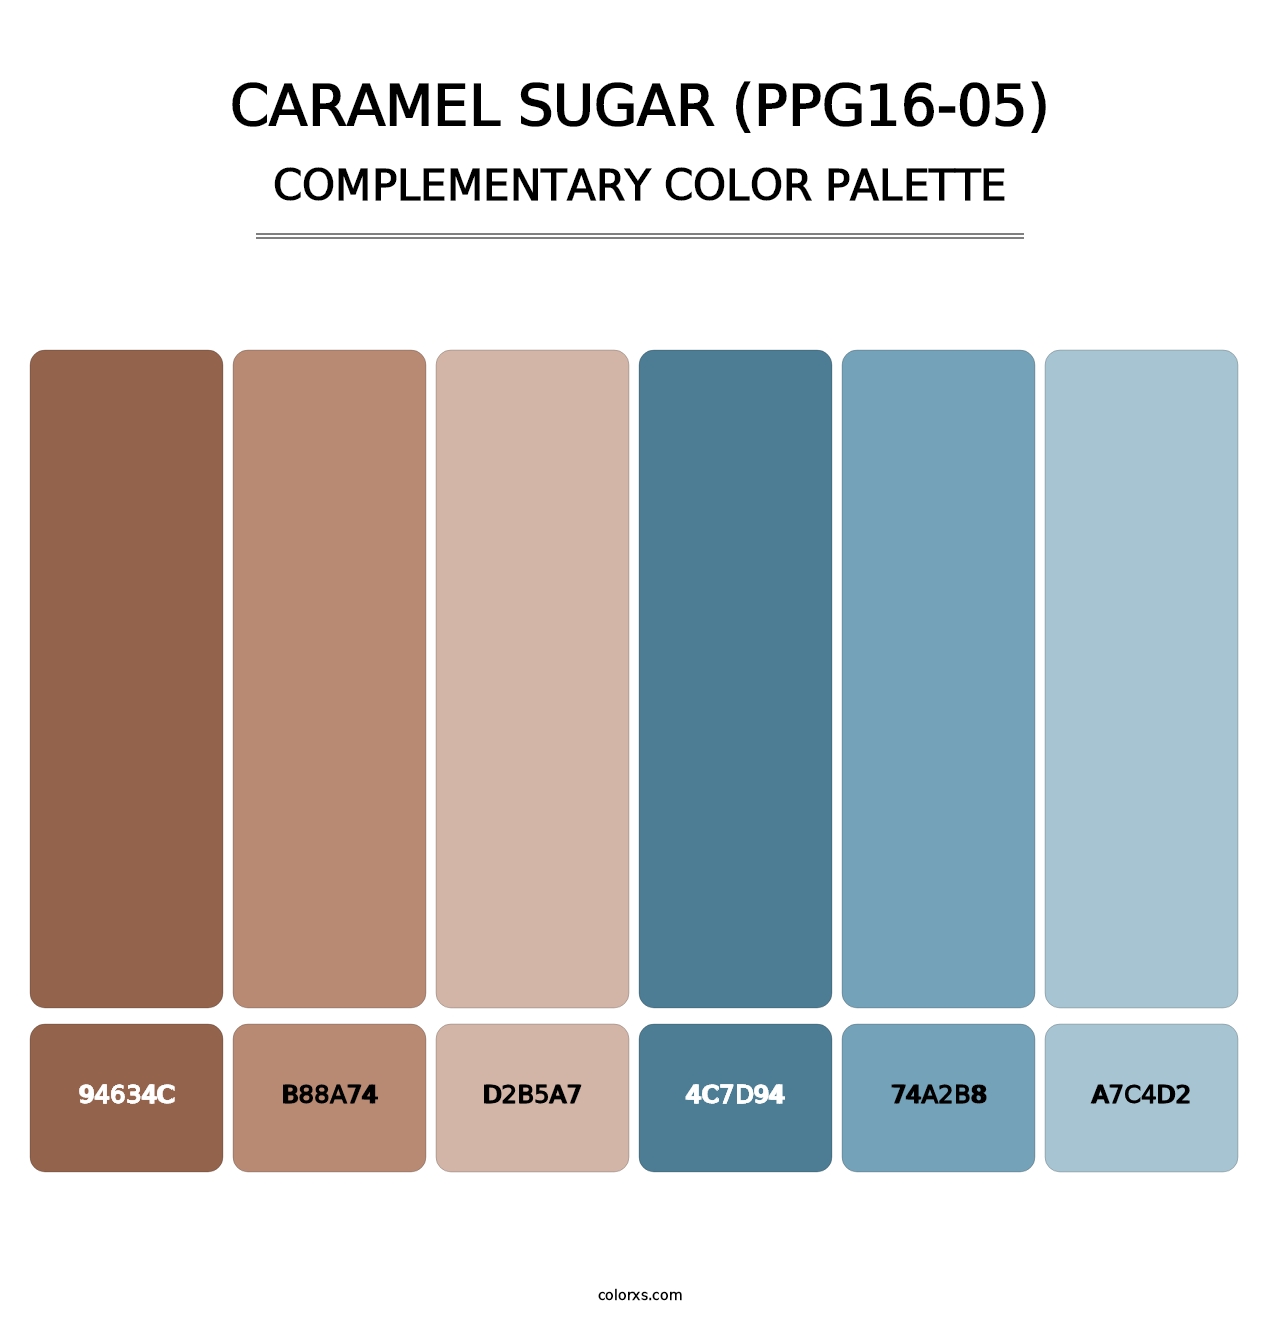 Caramel Sugar (PPG16-05) - Complementary Color Palette